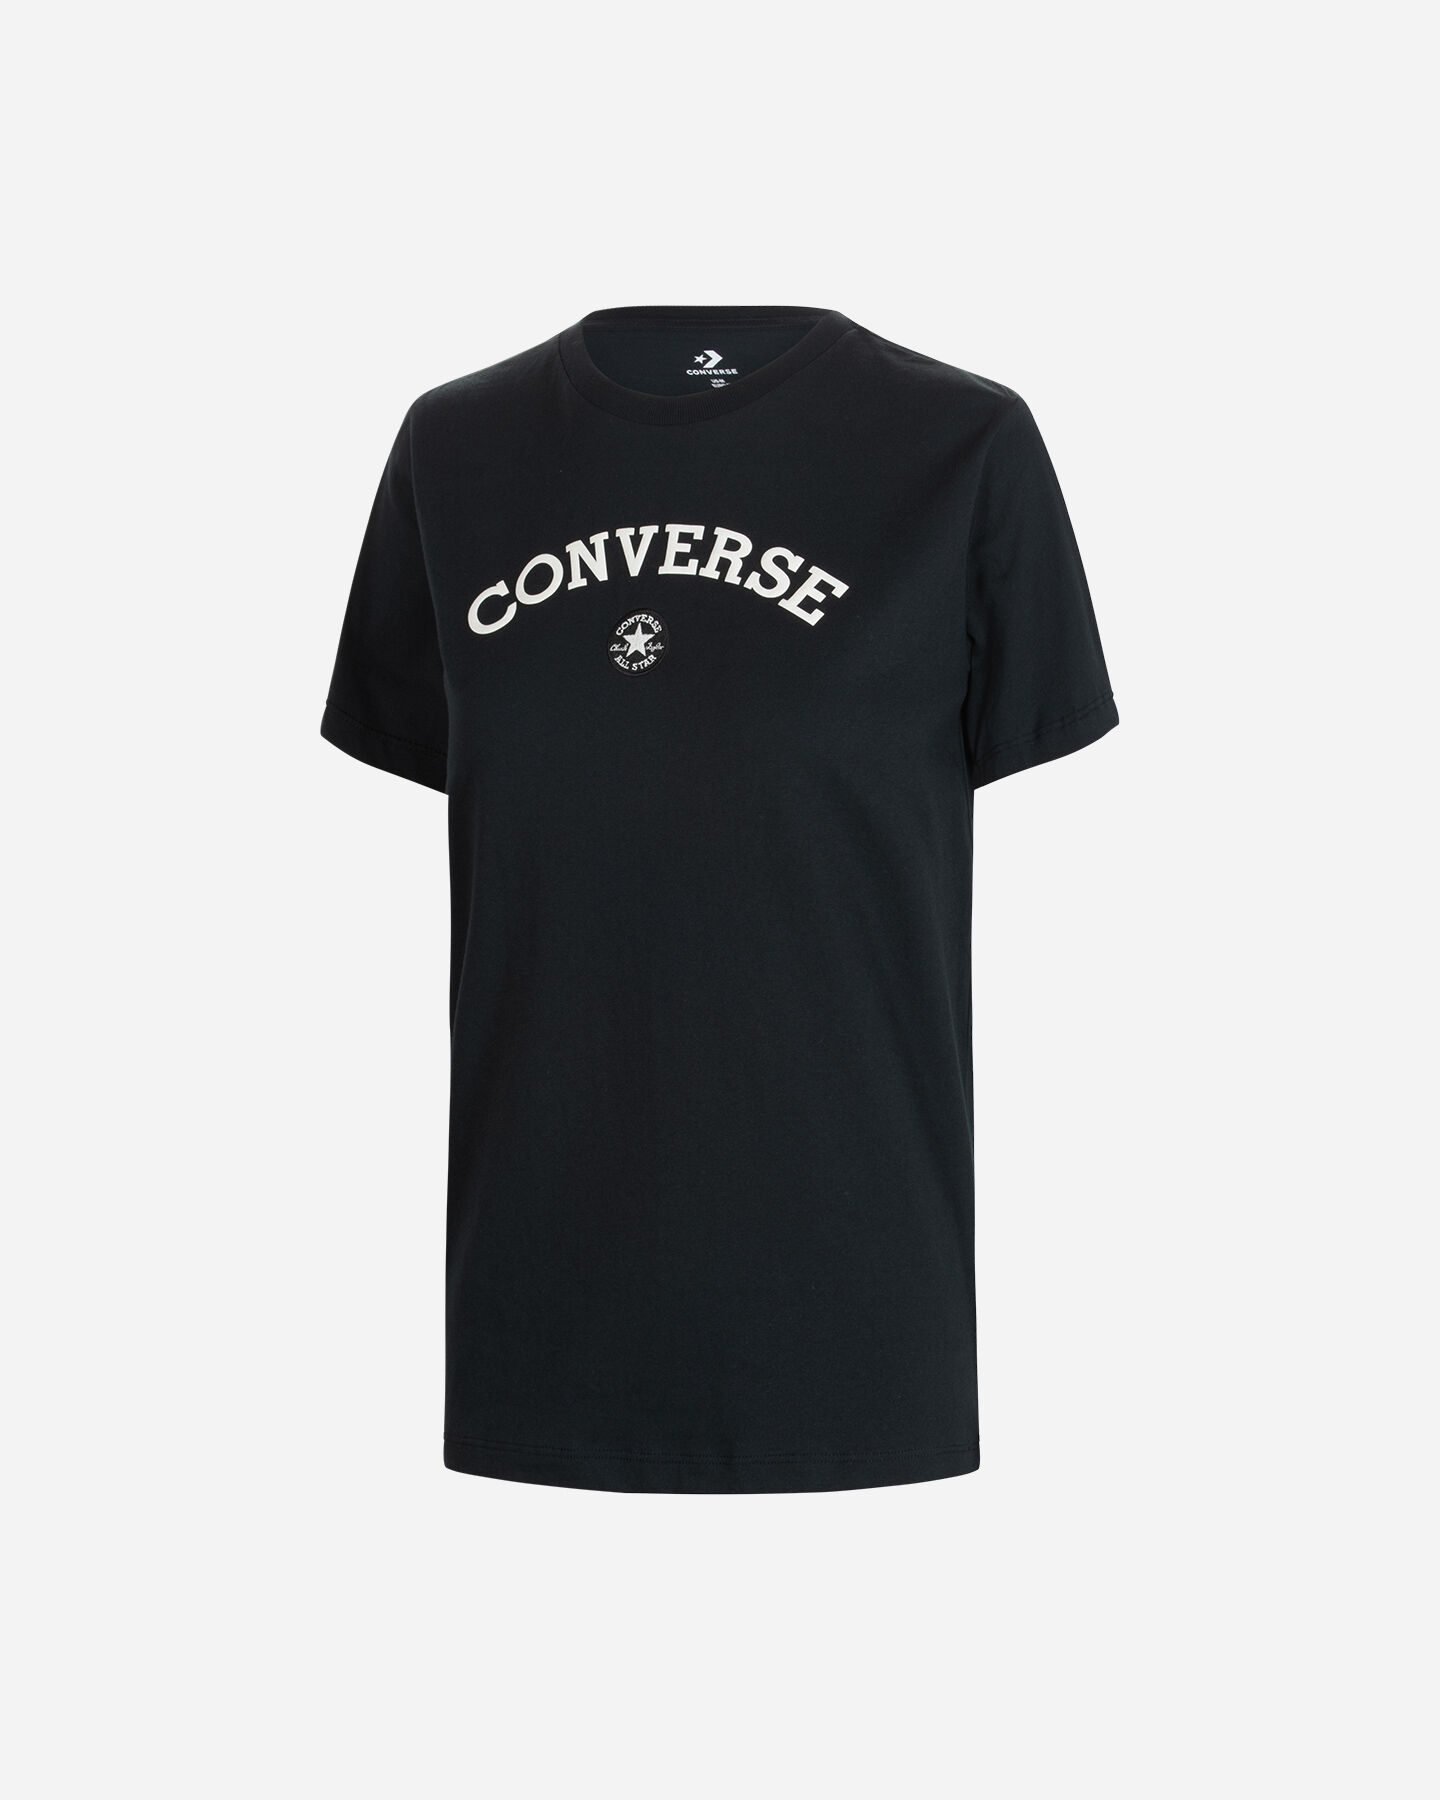  T-Shirt CONVERSE REGULAR W S5549451 scatto 0